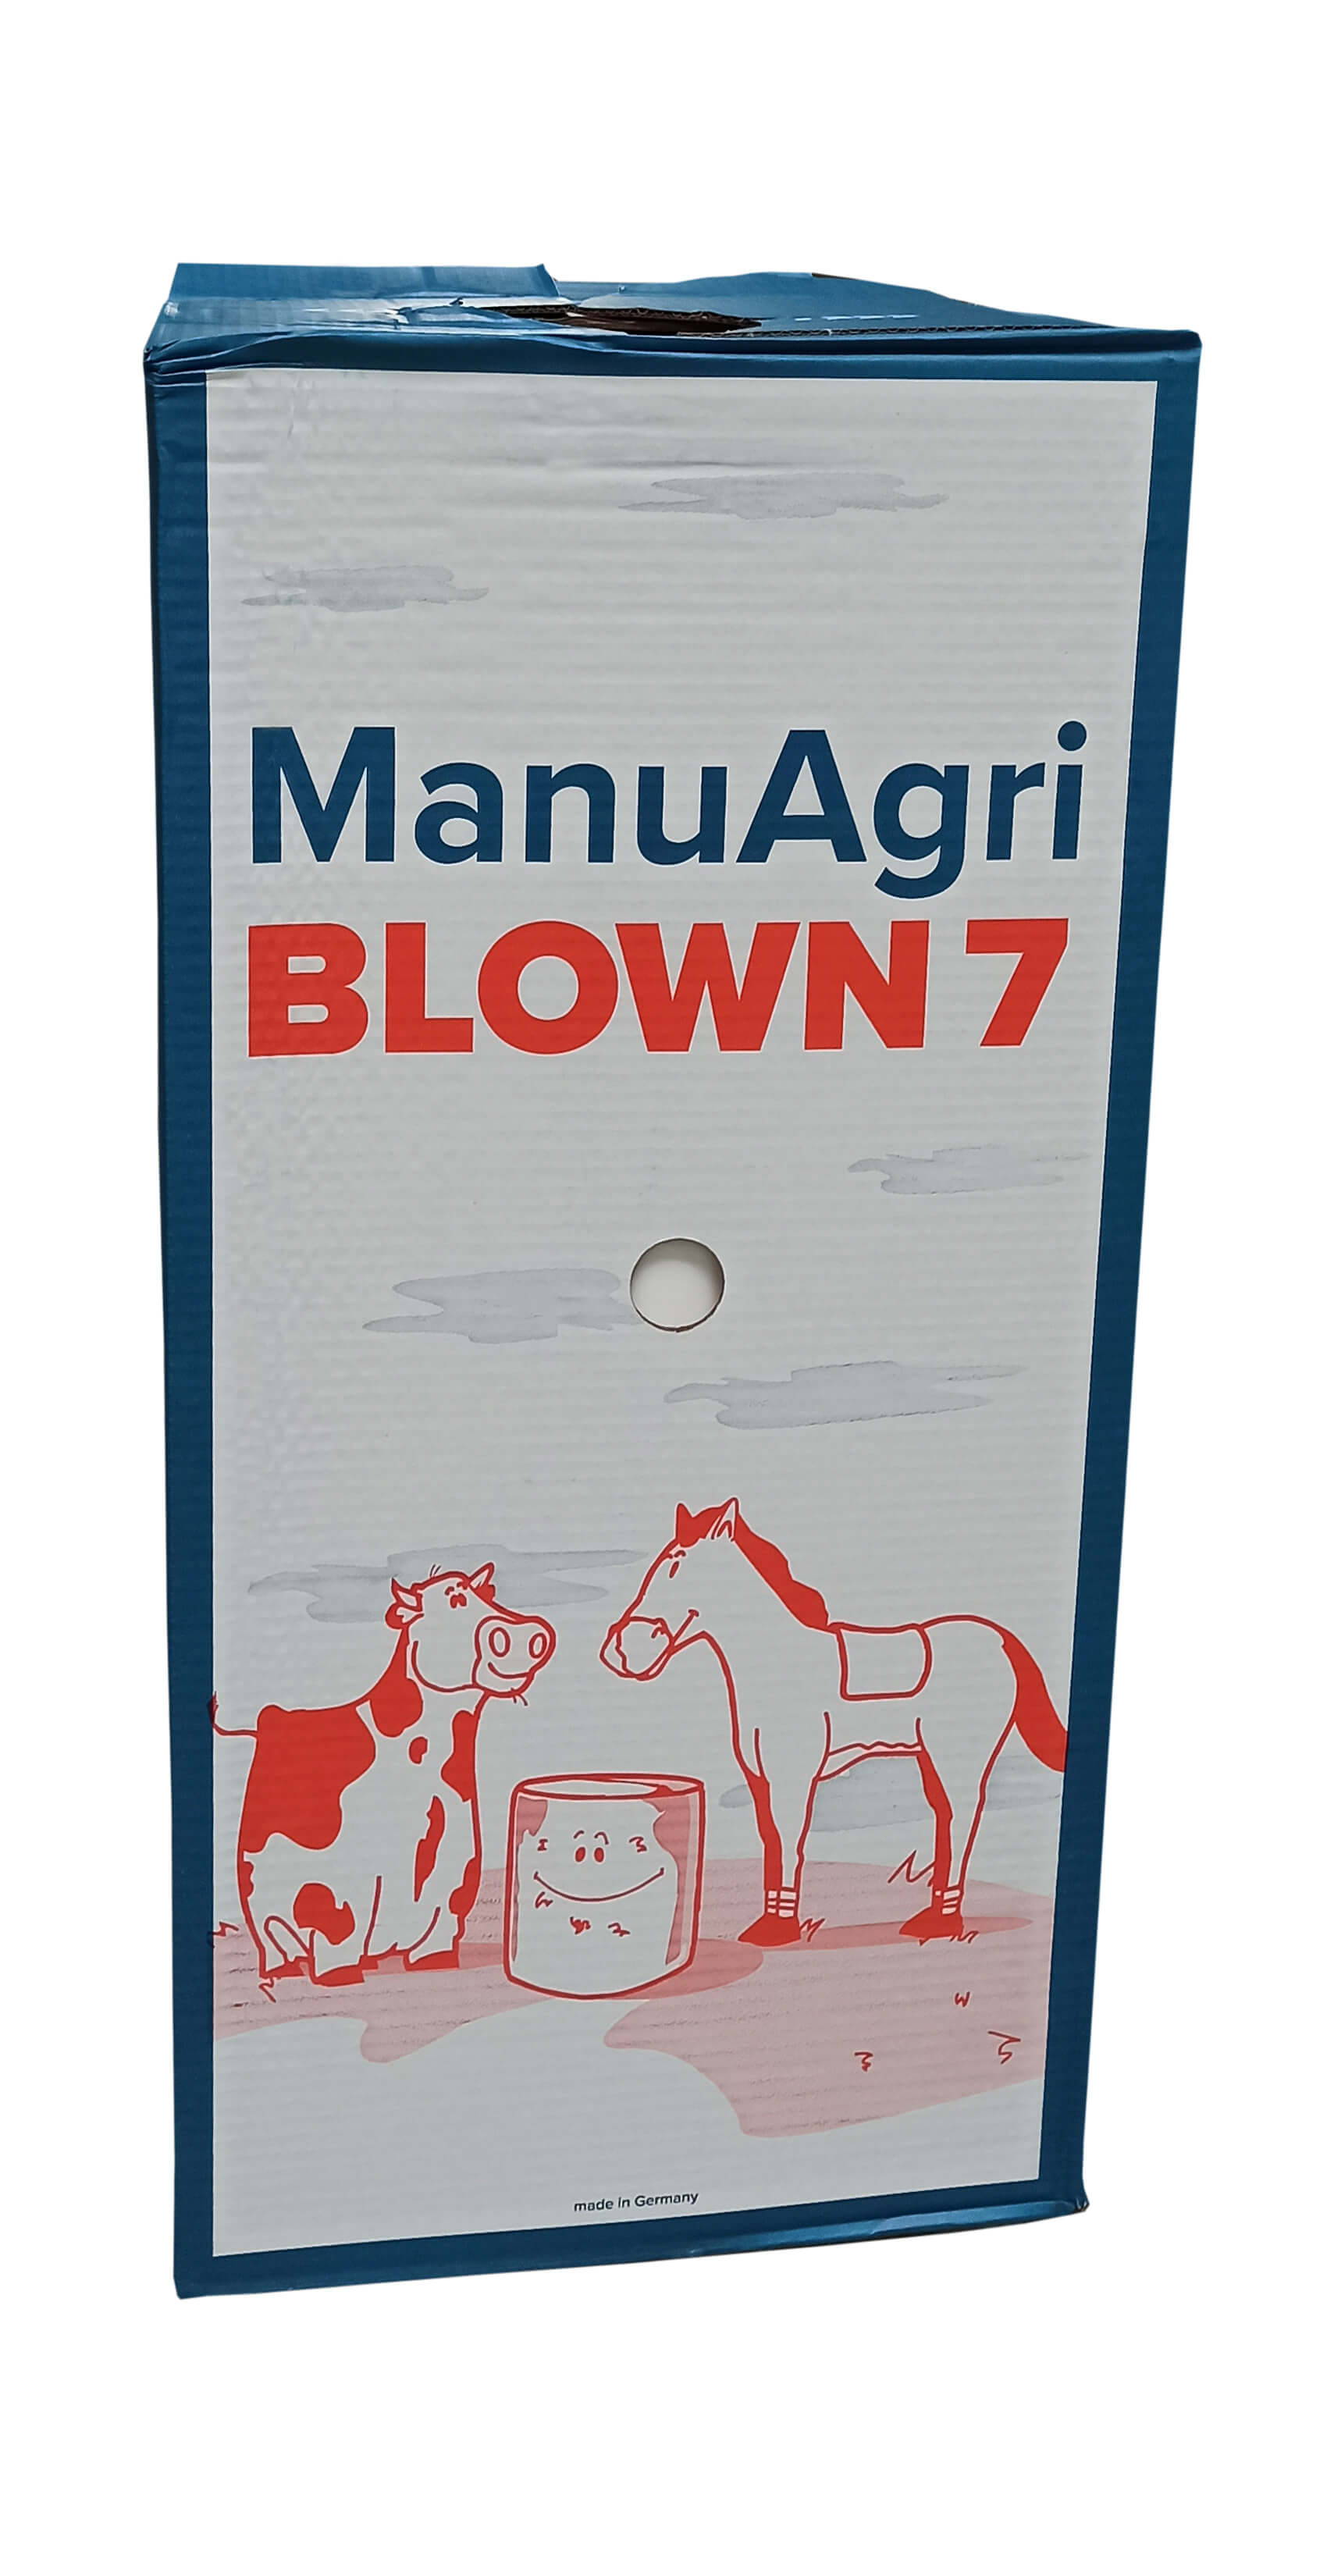 ManuAgri Blown7 Stretchfolie weiss 0,5 x 1.800 m, 25 mµ